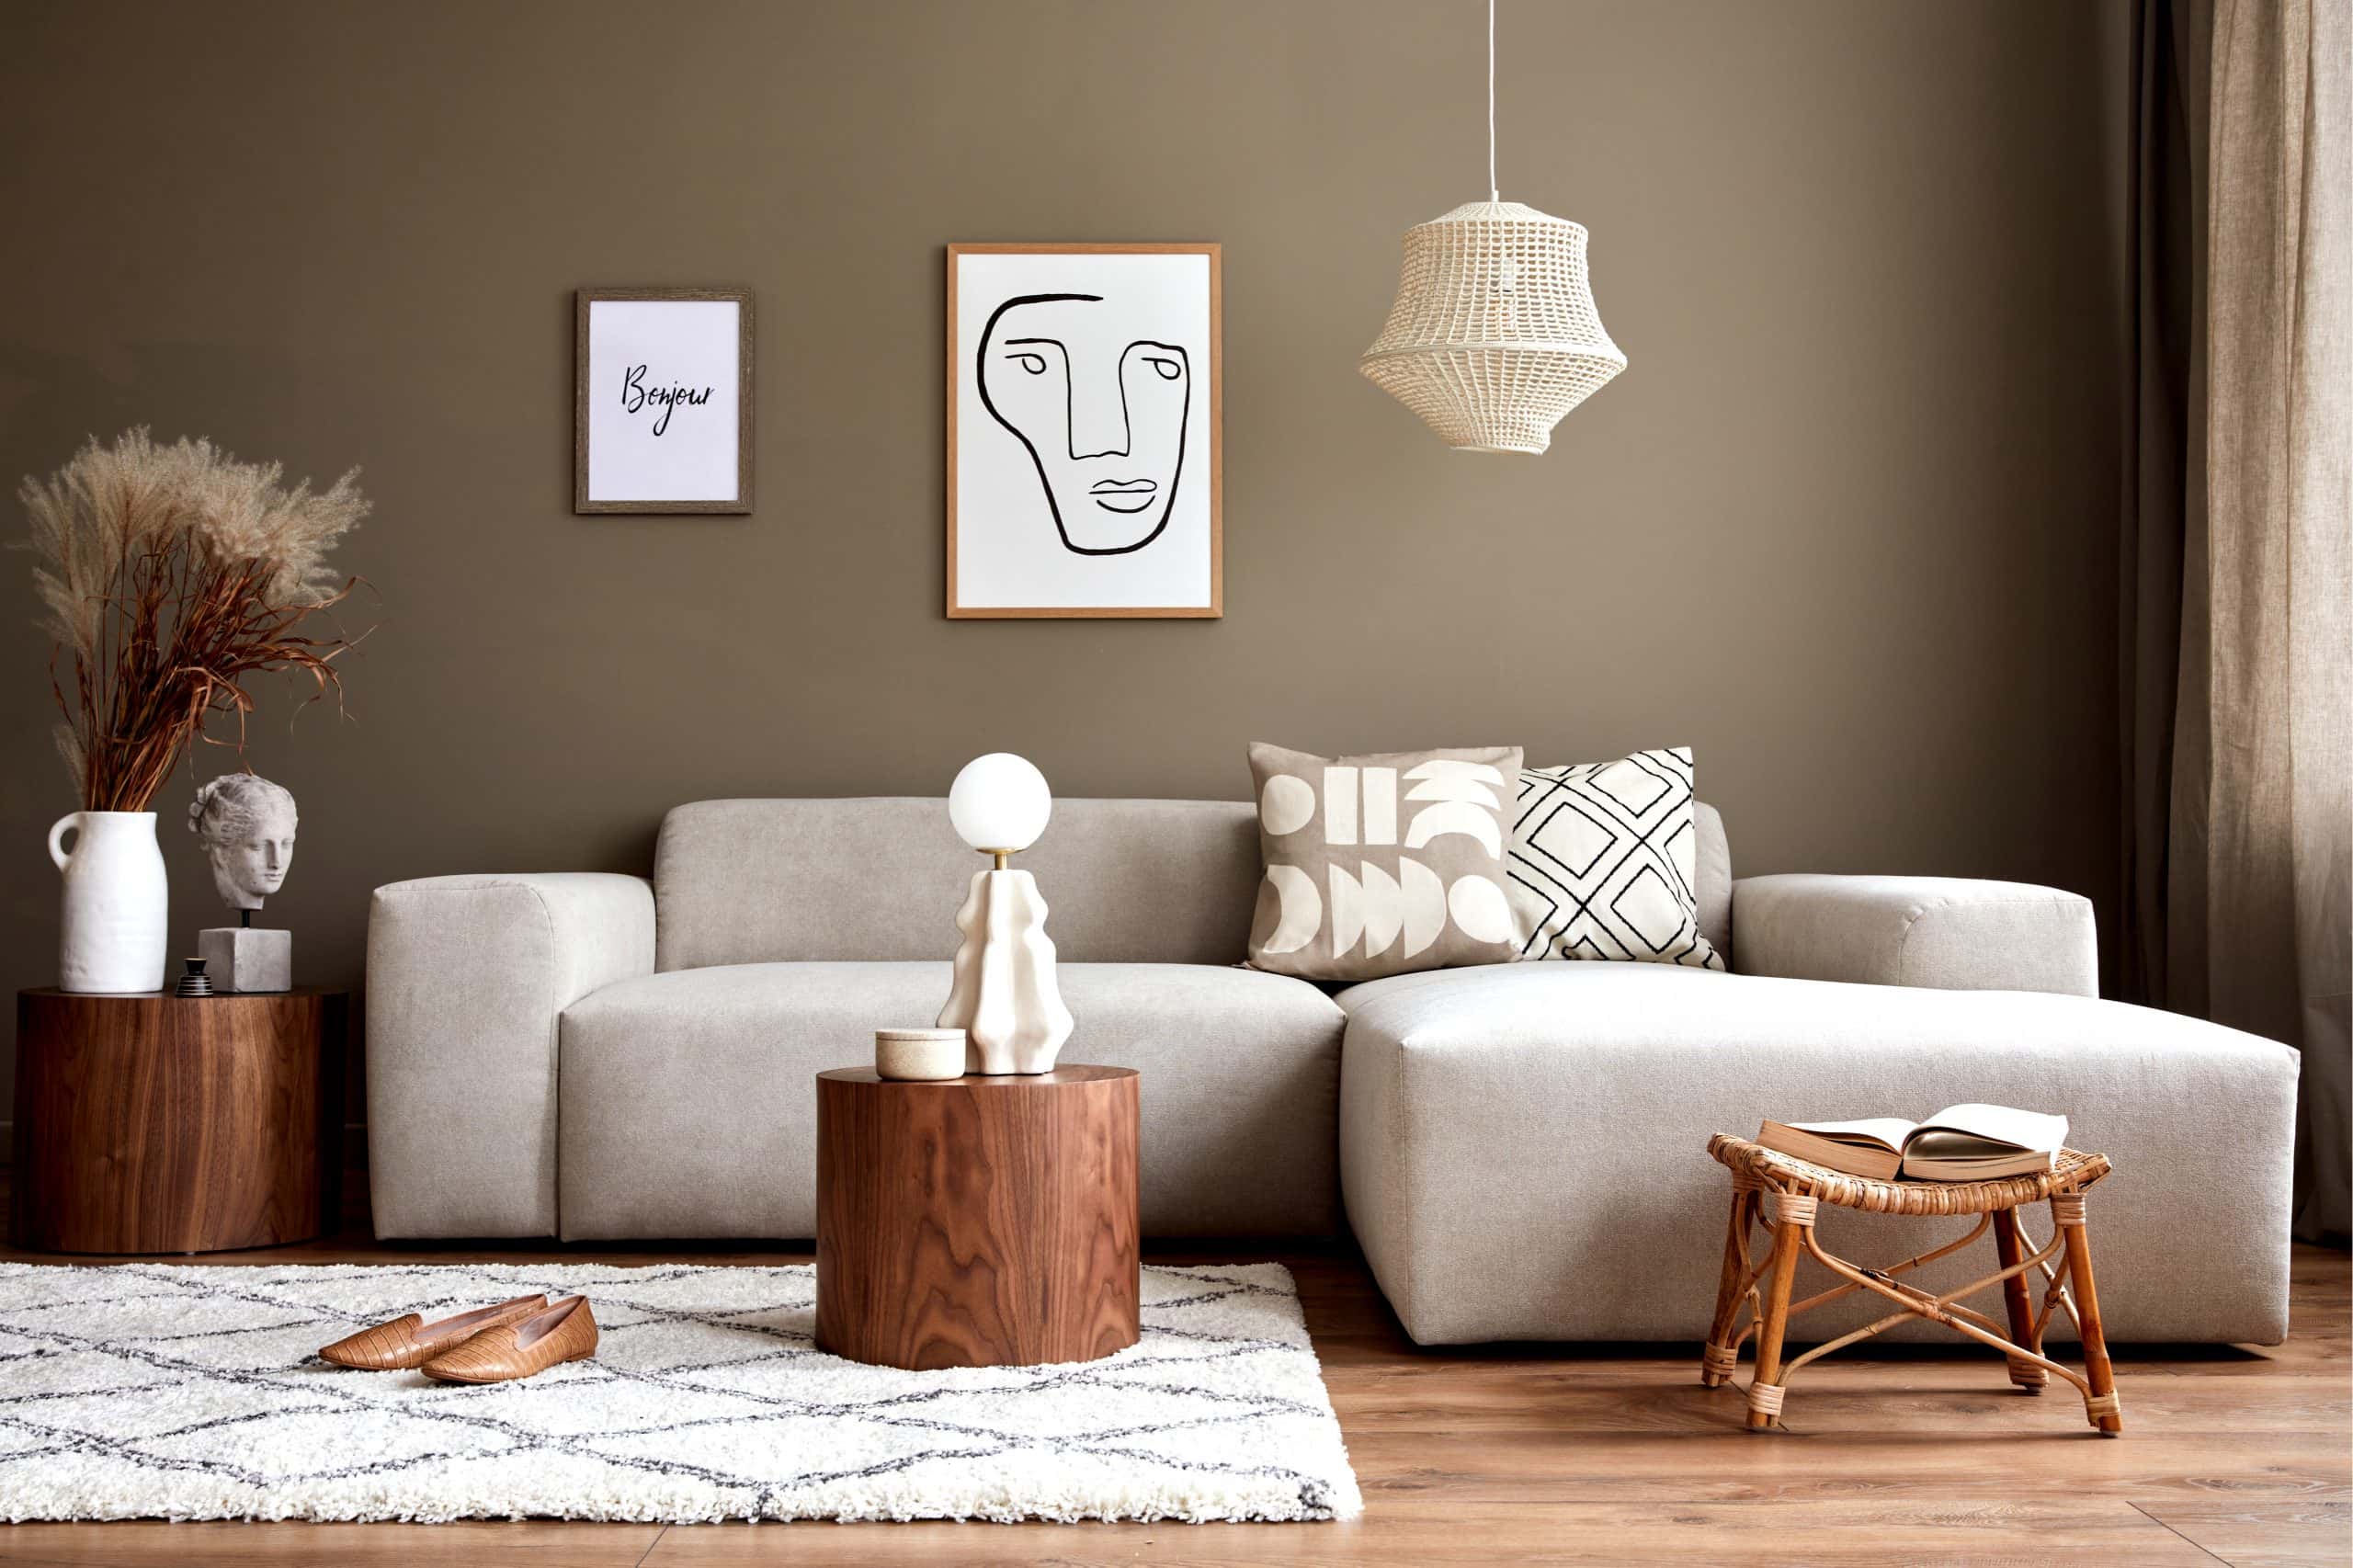 Residence in minimalist style located in Buzau - Nordic interior design -  Studio inSIGN